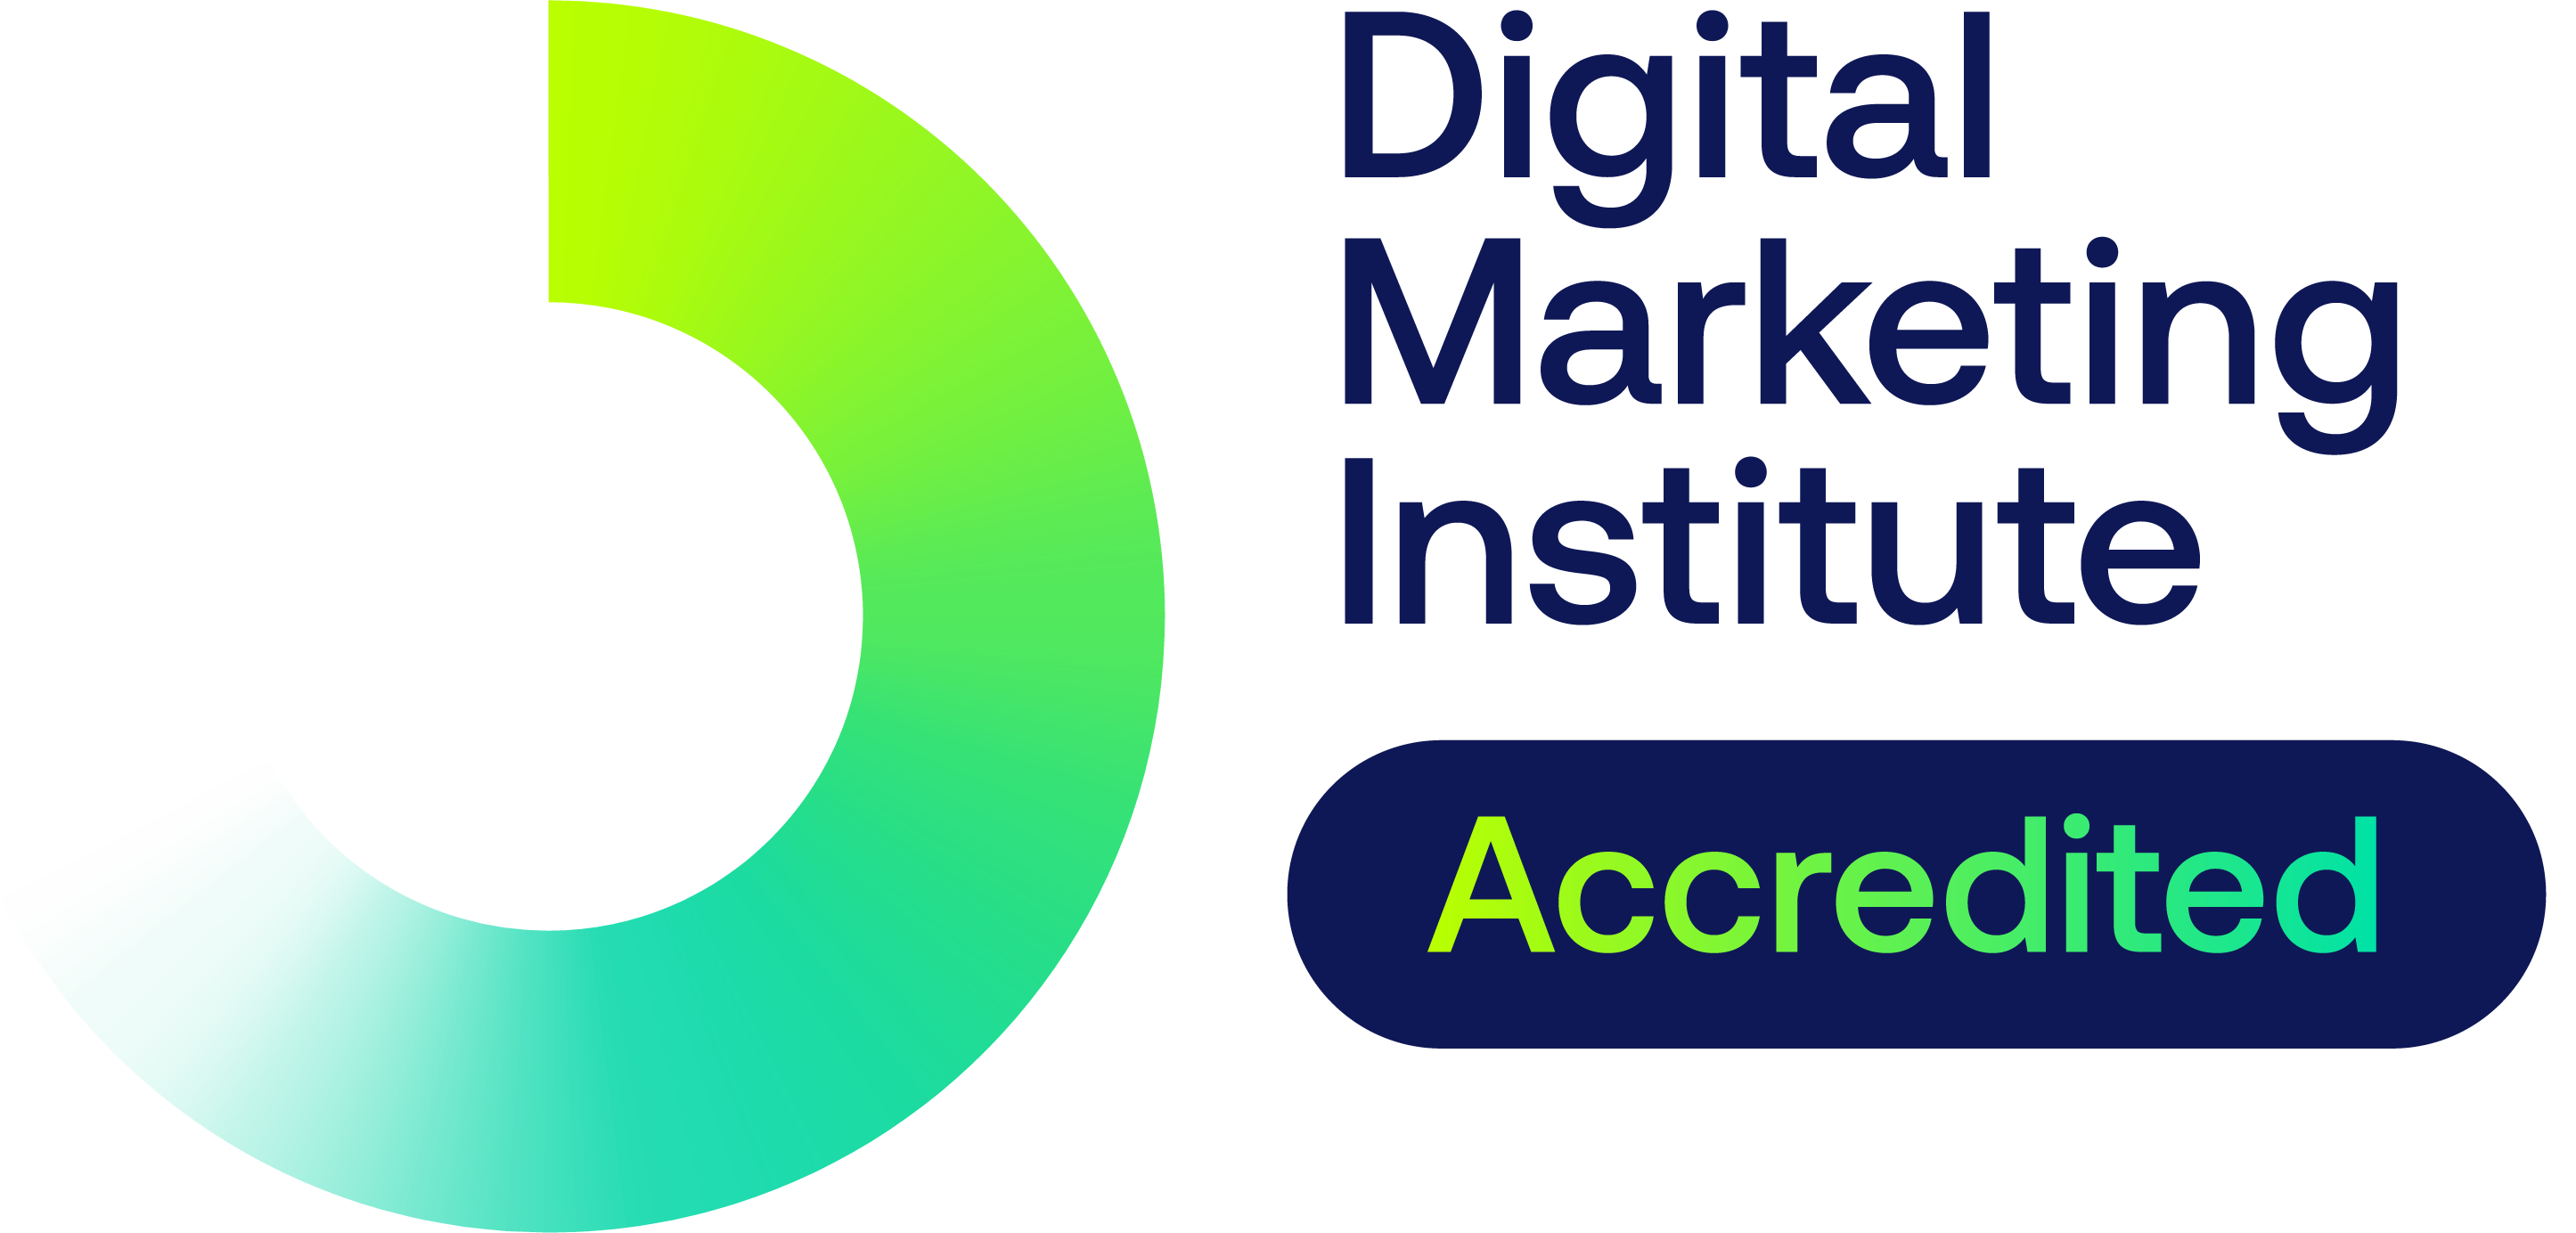 Digital Marketing Institute accreditation logo